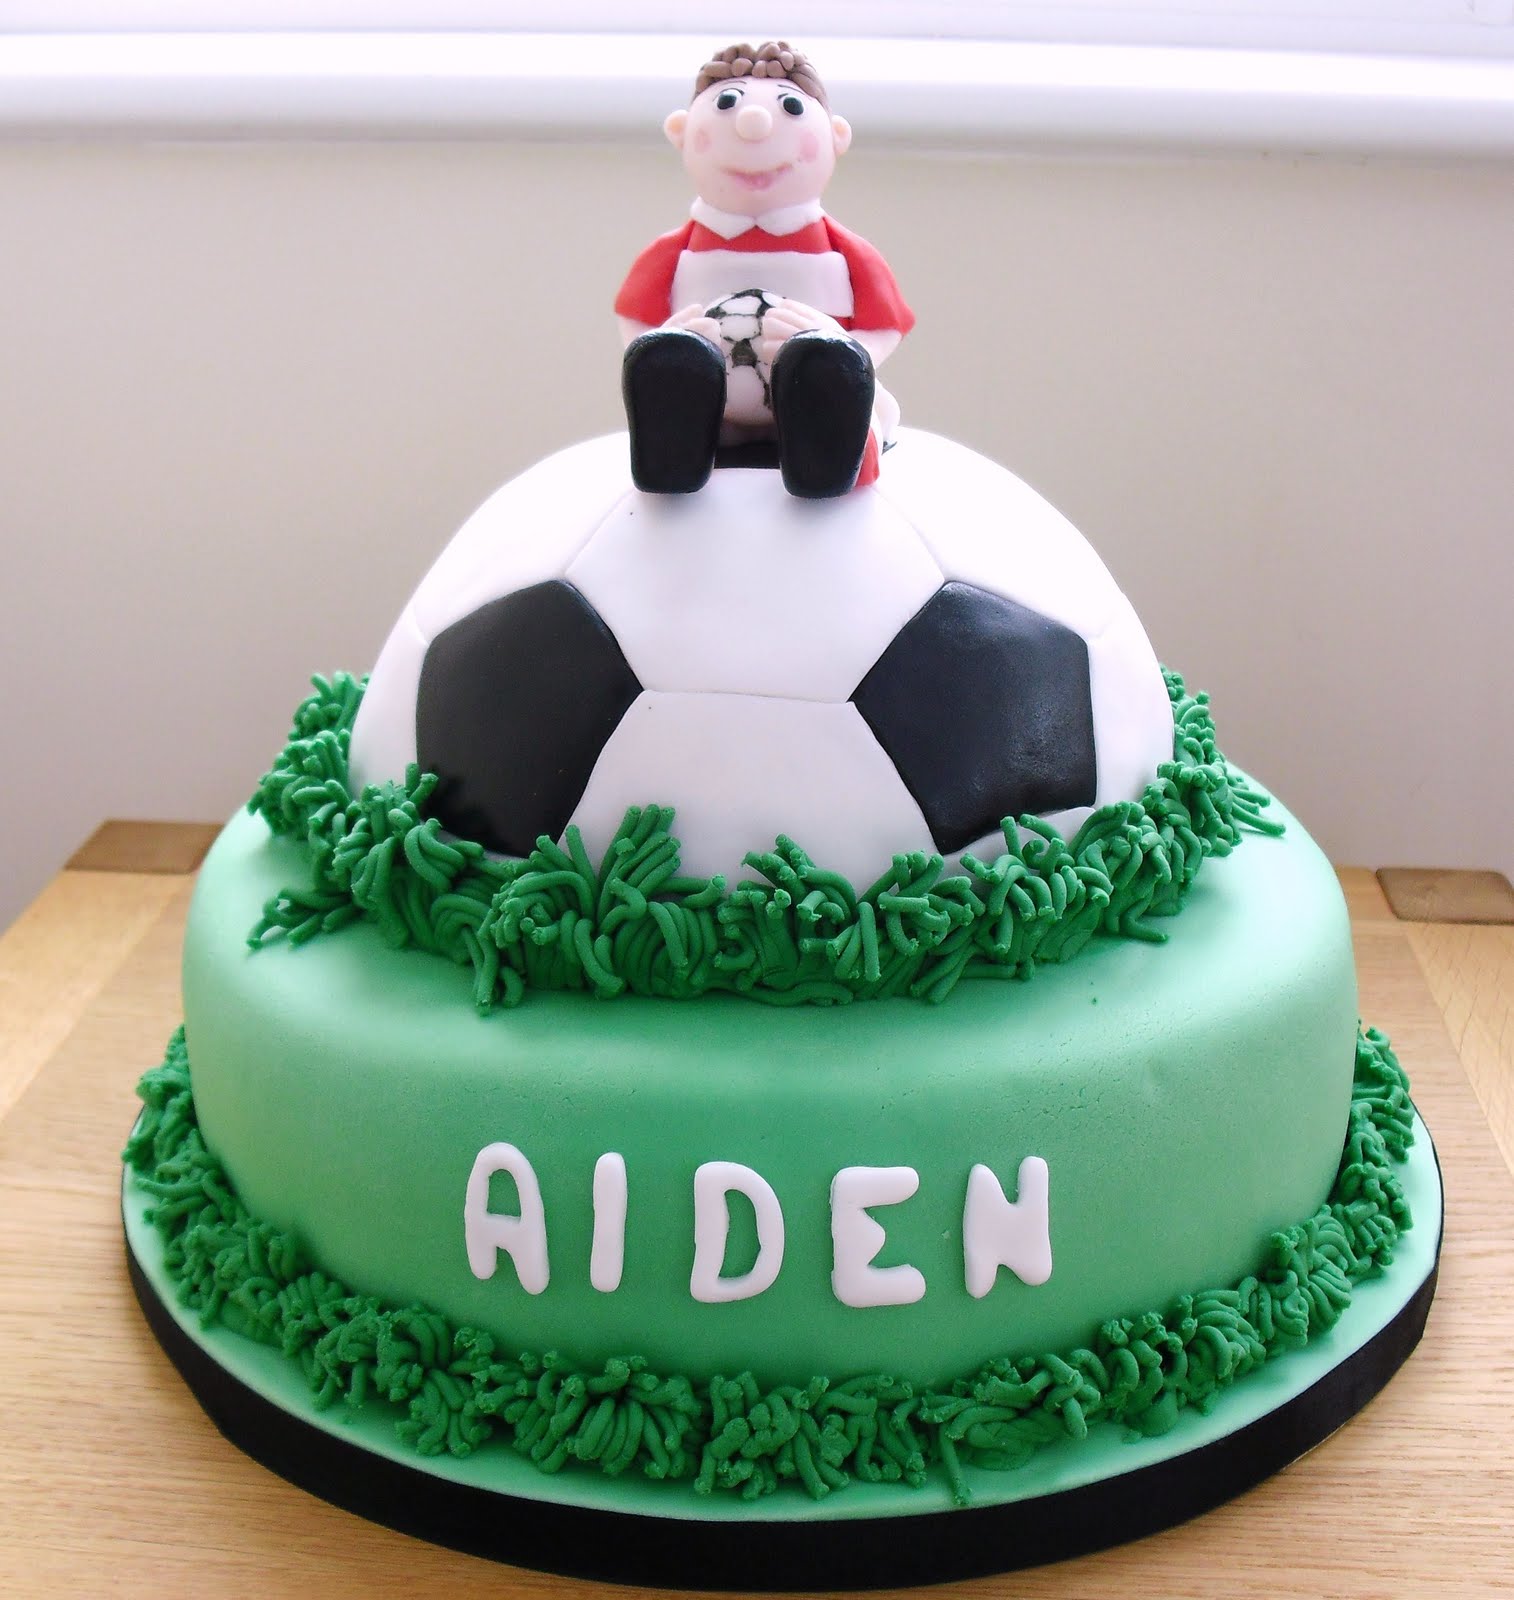 Soccer cake decorations | Variety